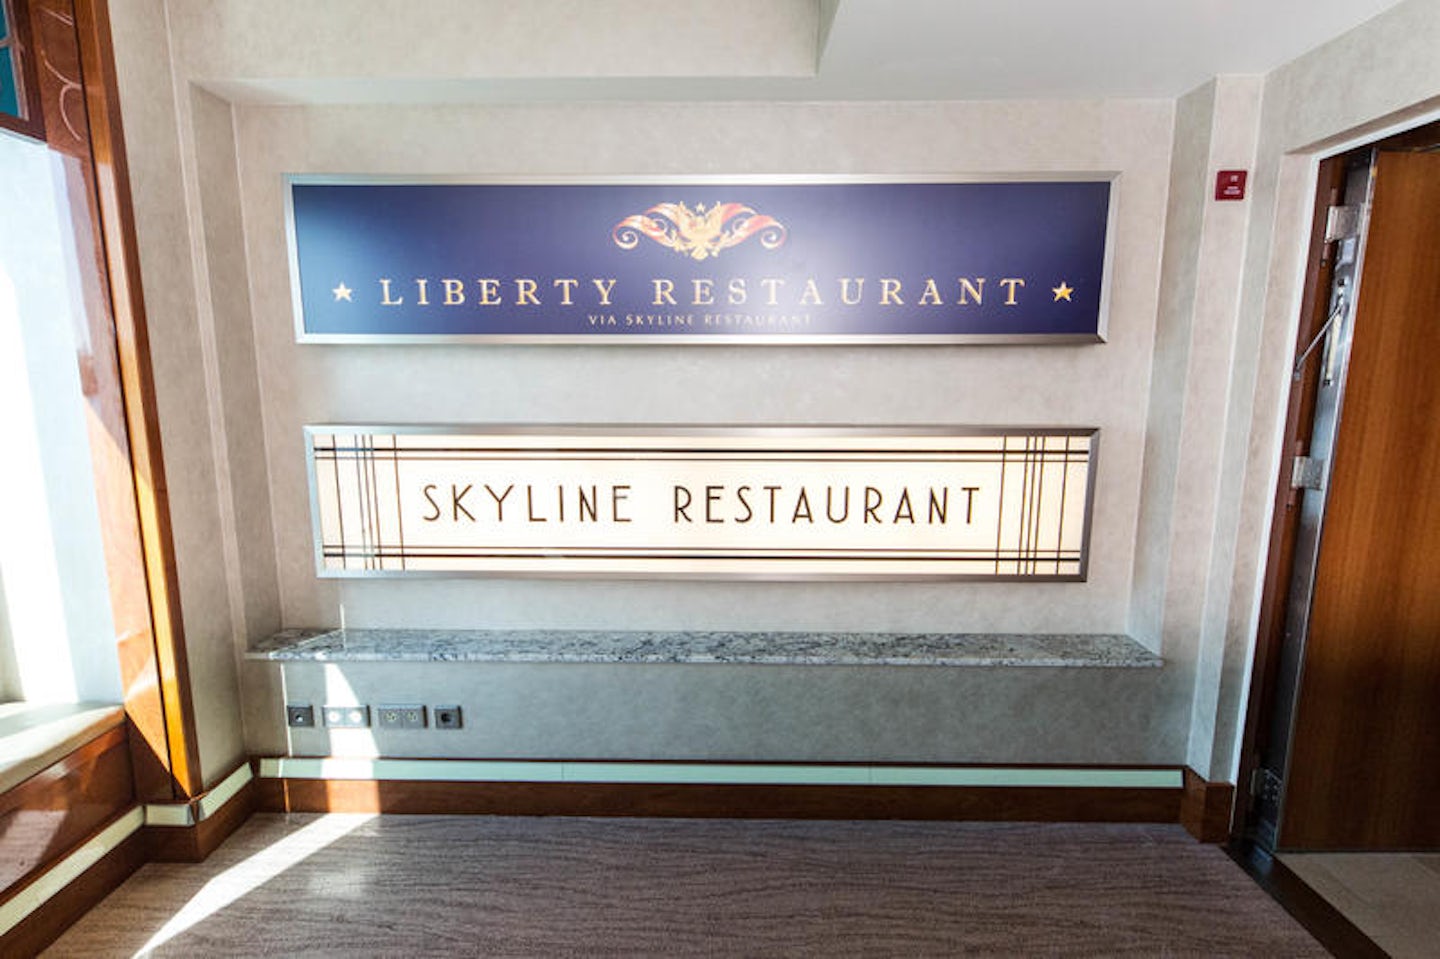 Skyline Restaurant on Pride of America